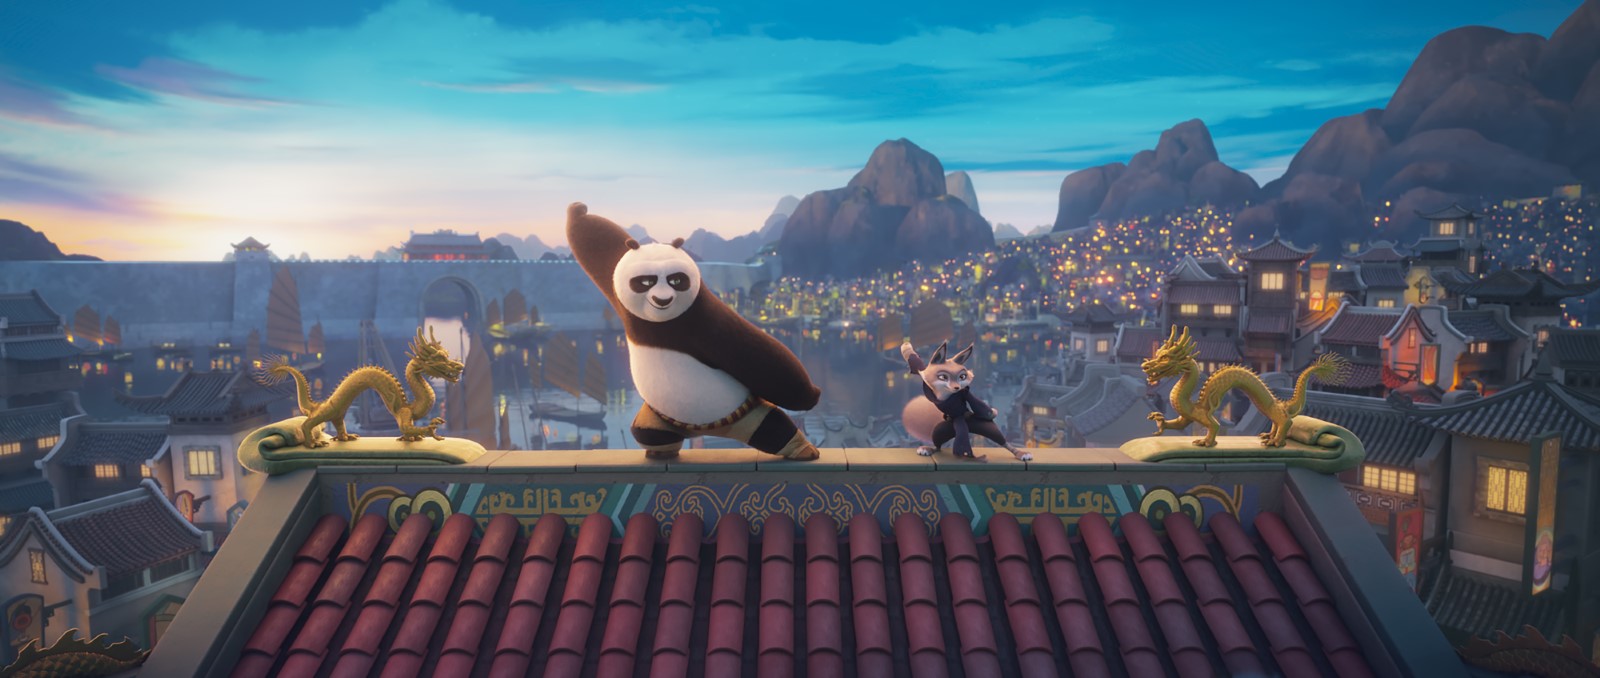 Szenenbild aus dem Film „Kung Fu Panda 4“